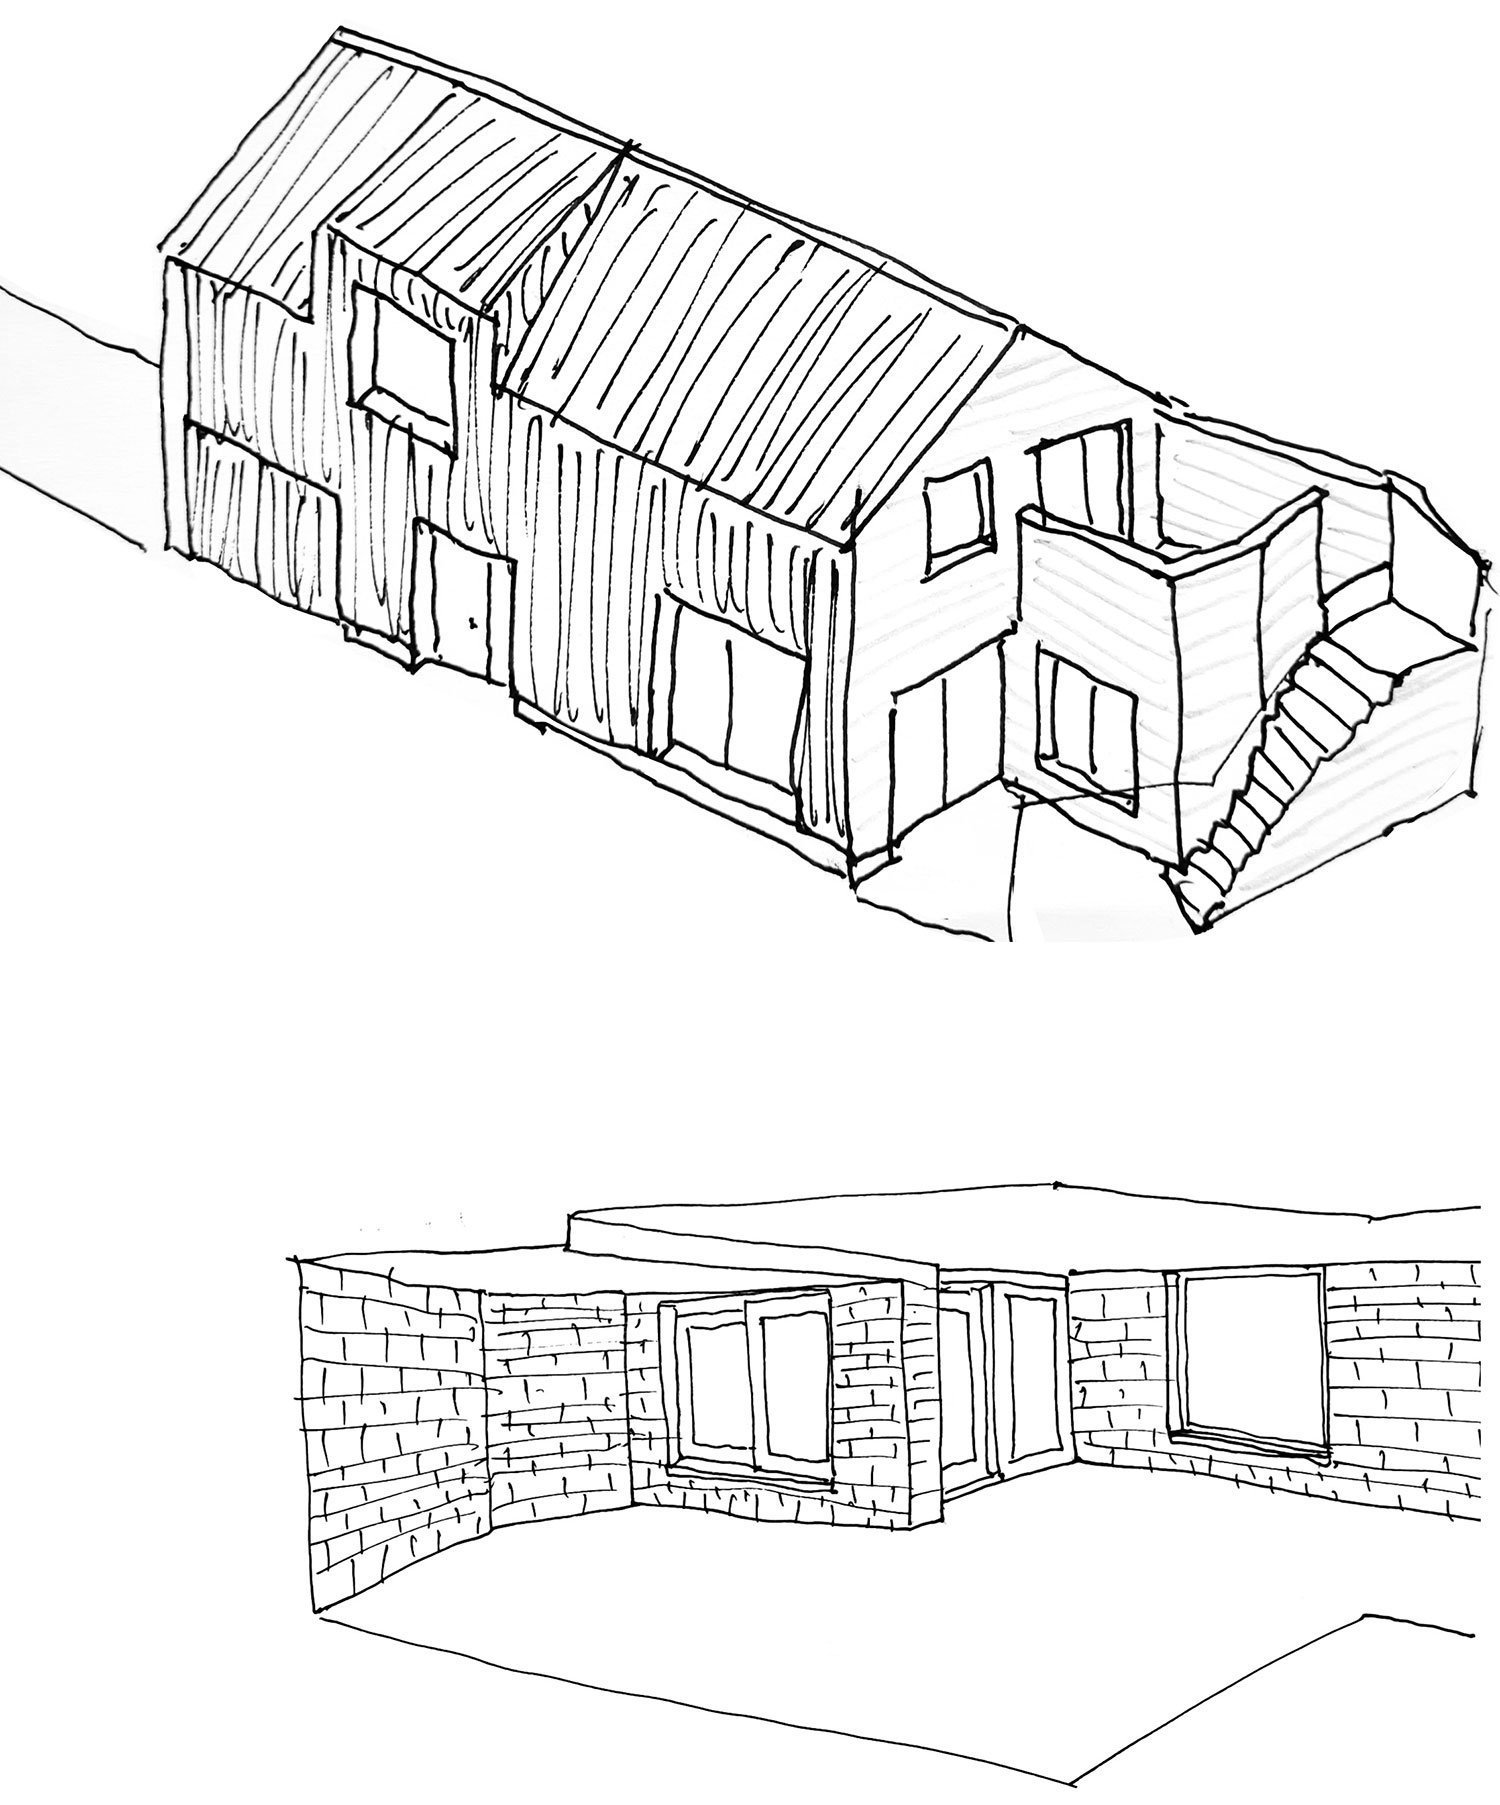 Evercreech-somerset-architect-prewett-bizley-house-passivhaus-sketches.jpg